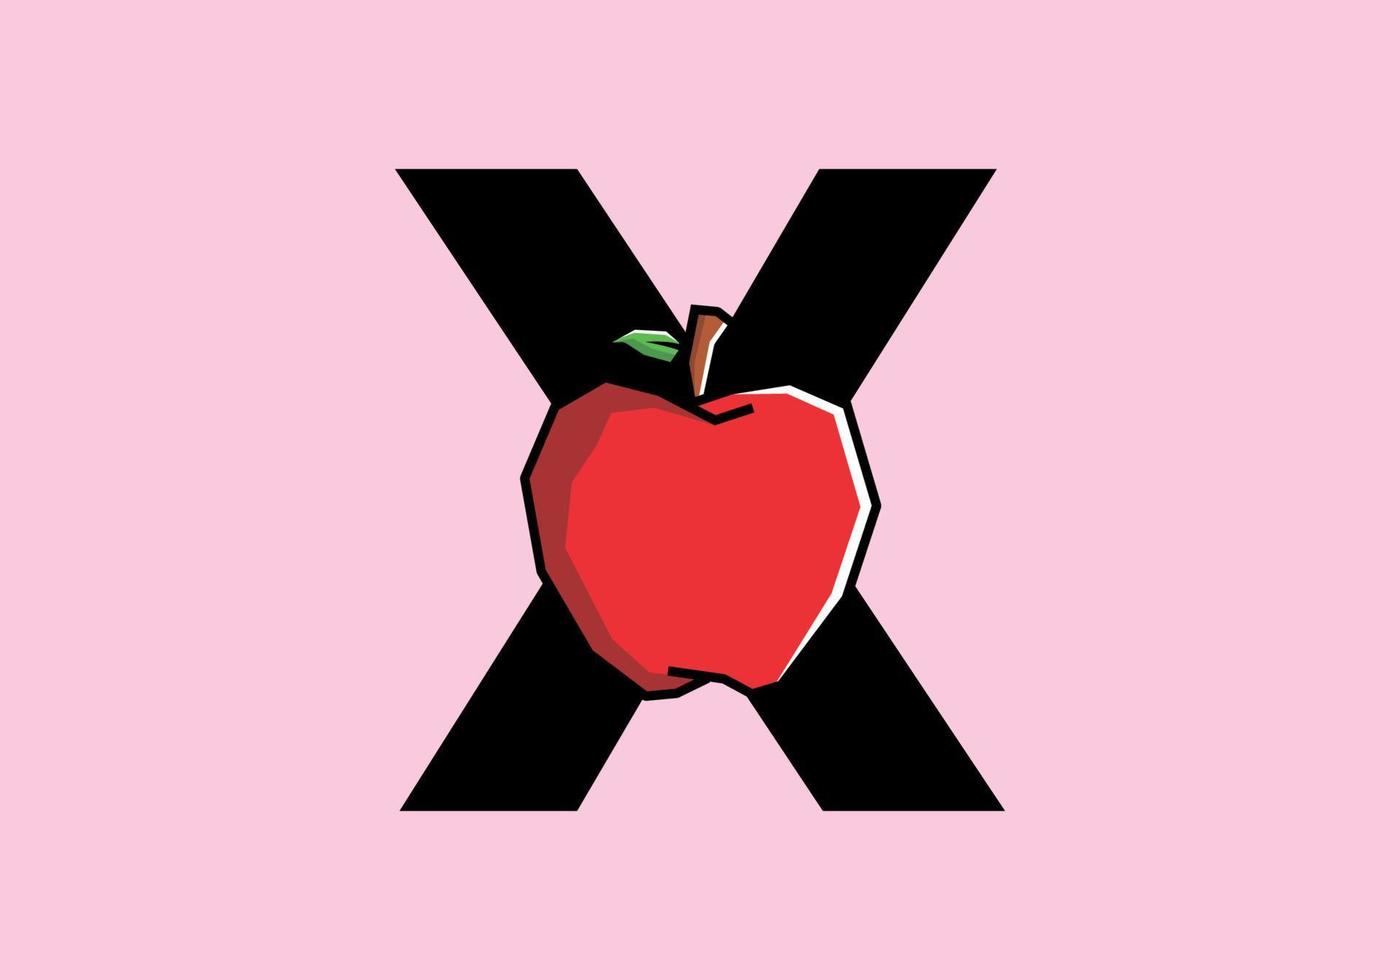 x Anfangsbuchstabe mit rotem Apfel im steifen Kunststil vektor